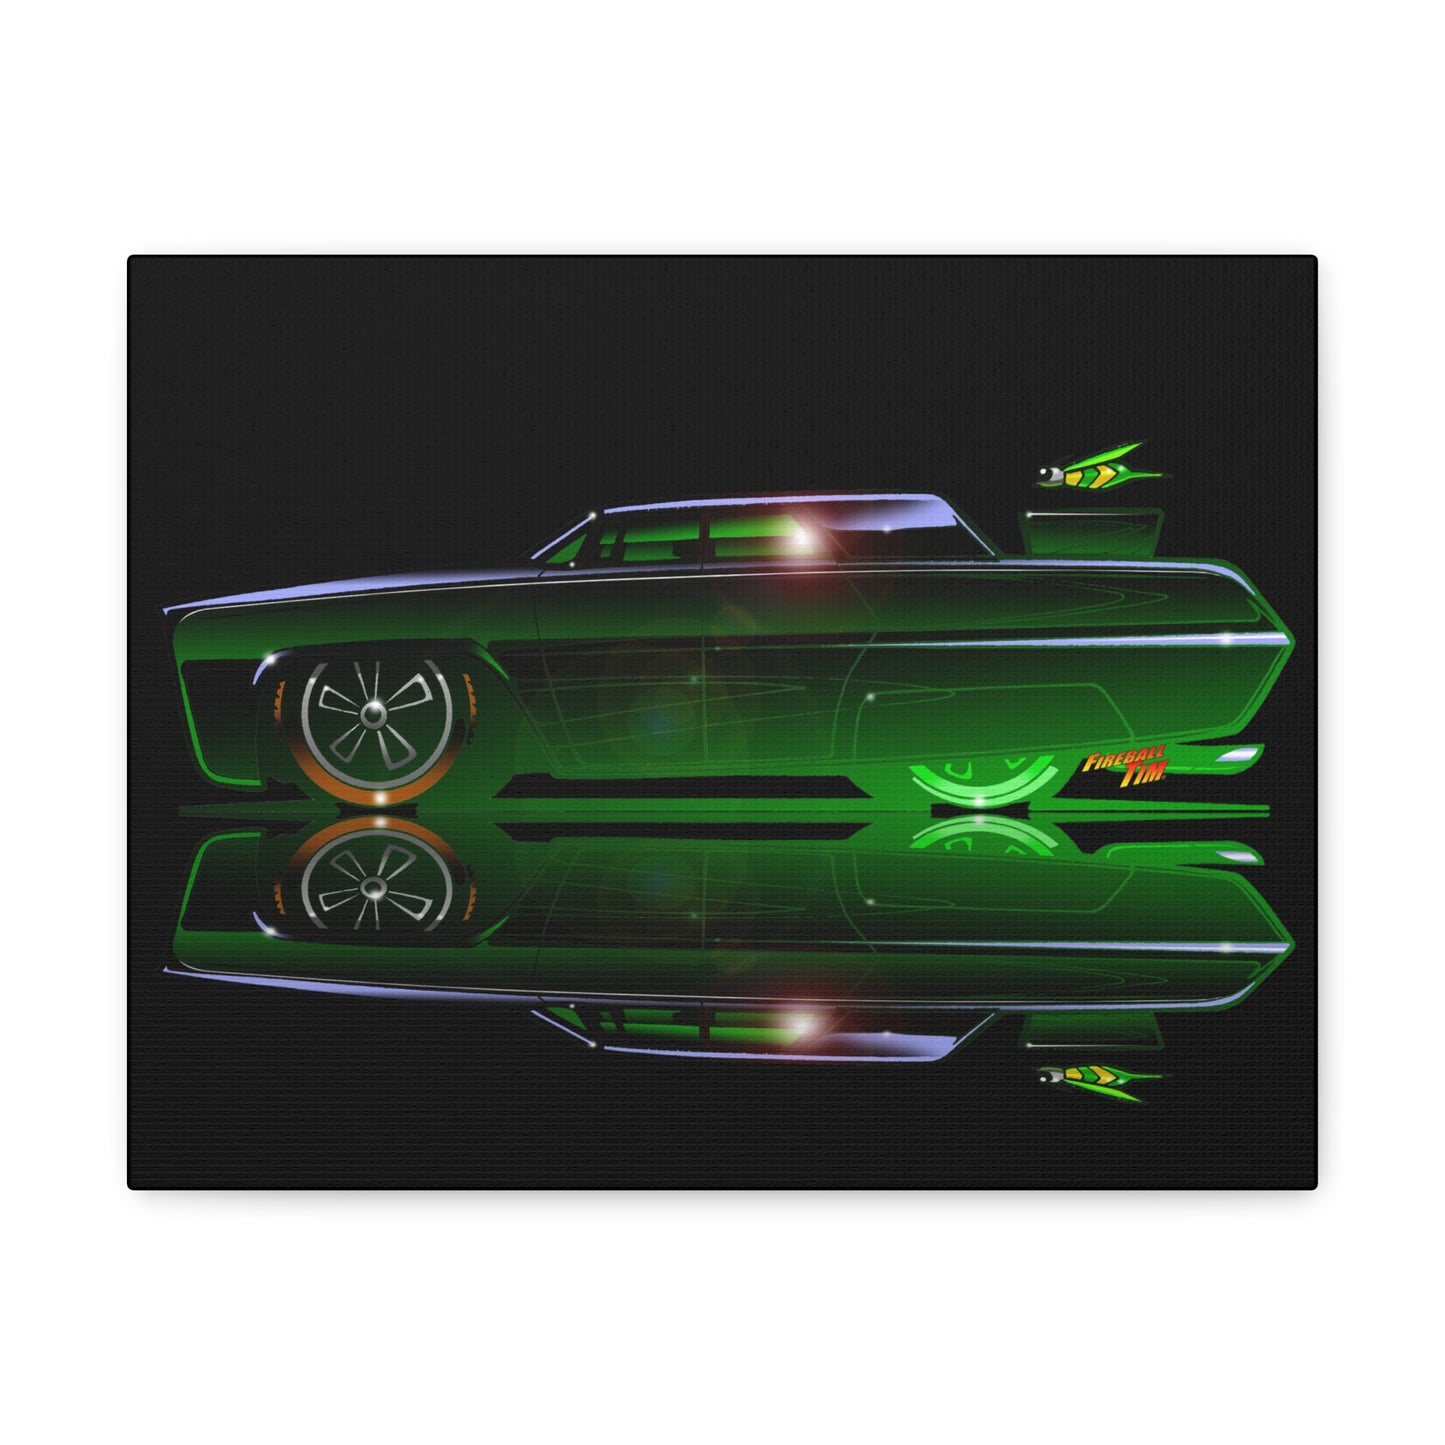 THE GREEN HORNET Black Beauty Movie Car Canvas Gallery Art Print 11X14